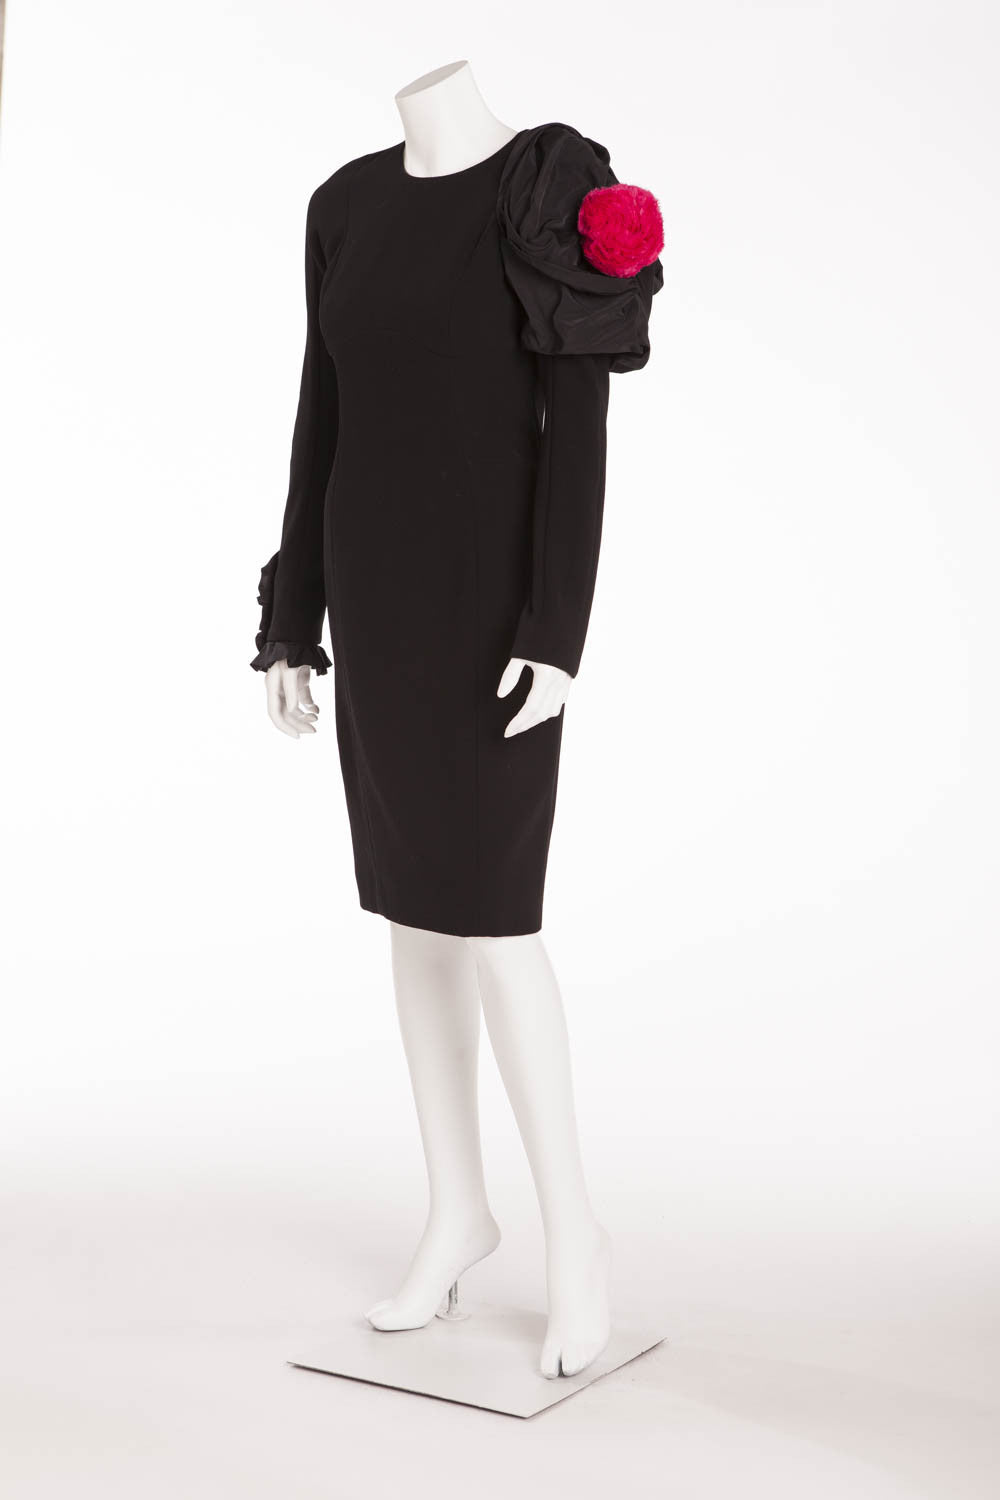 Louis Vuitton Black tweed Embellished Waist Detail Sleeveless Sheath Dress  M Louis Vuitton